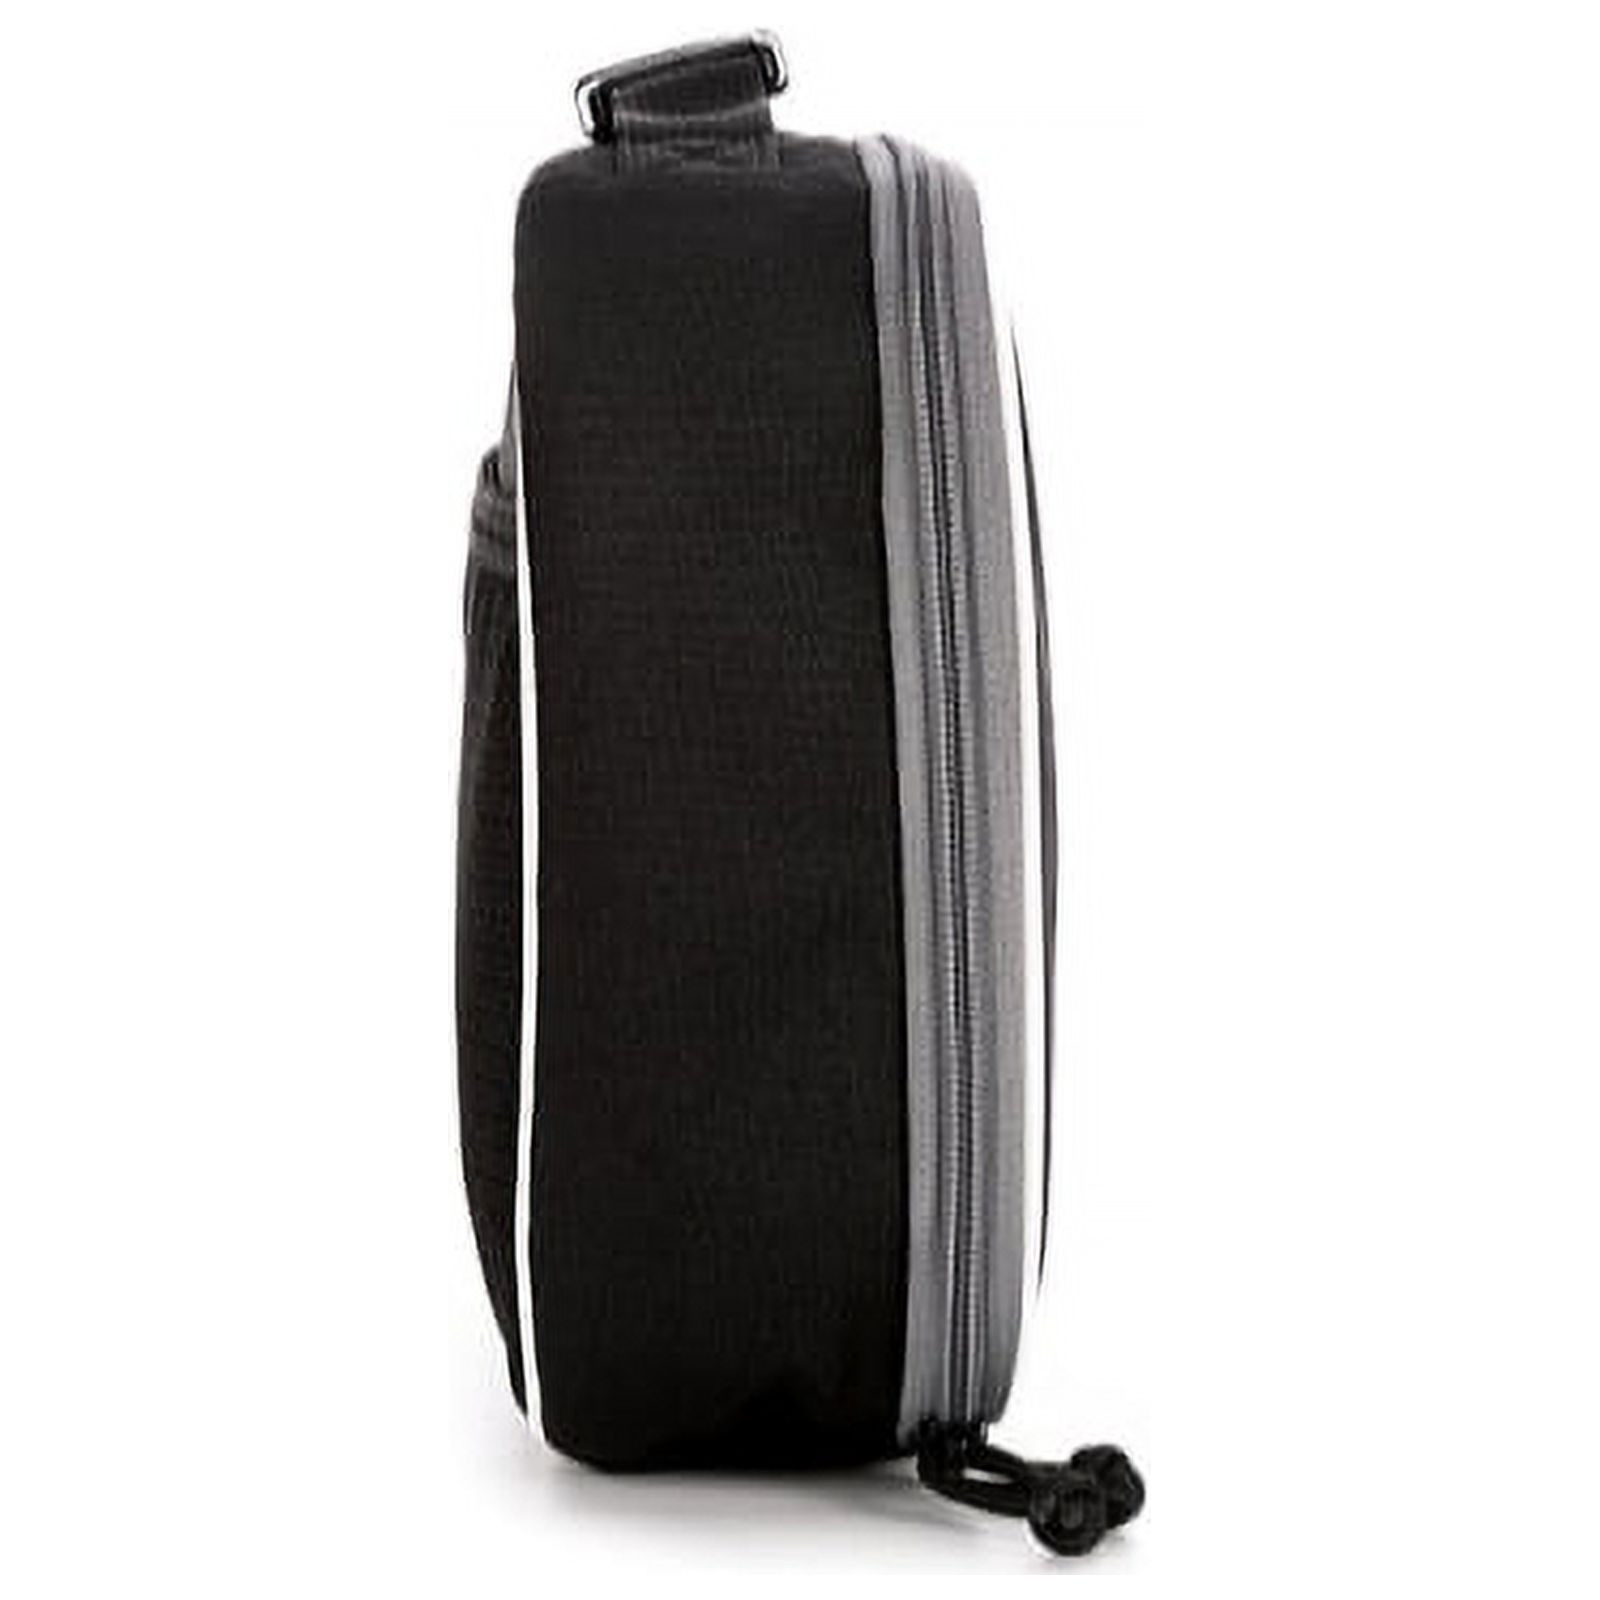 adidas Foundation Lunch Bag, Black/White, One Size - image 4 of 5